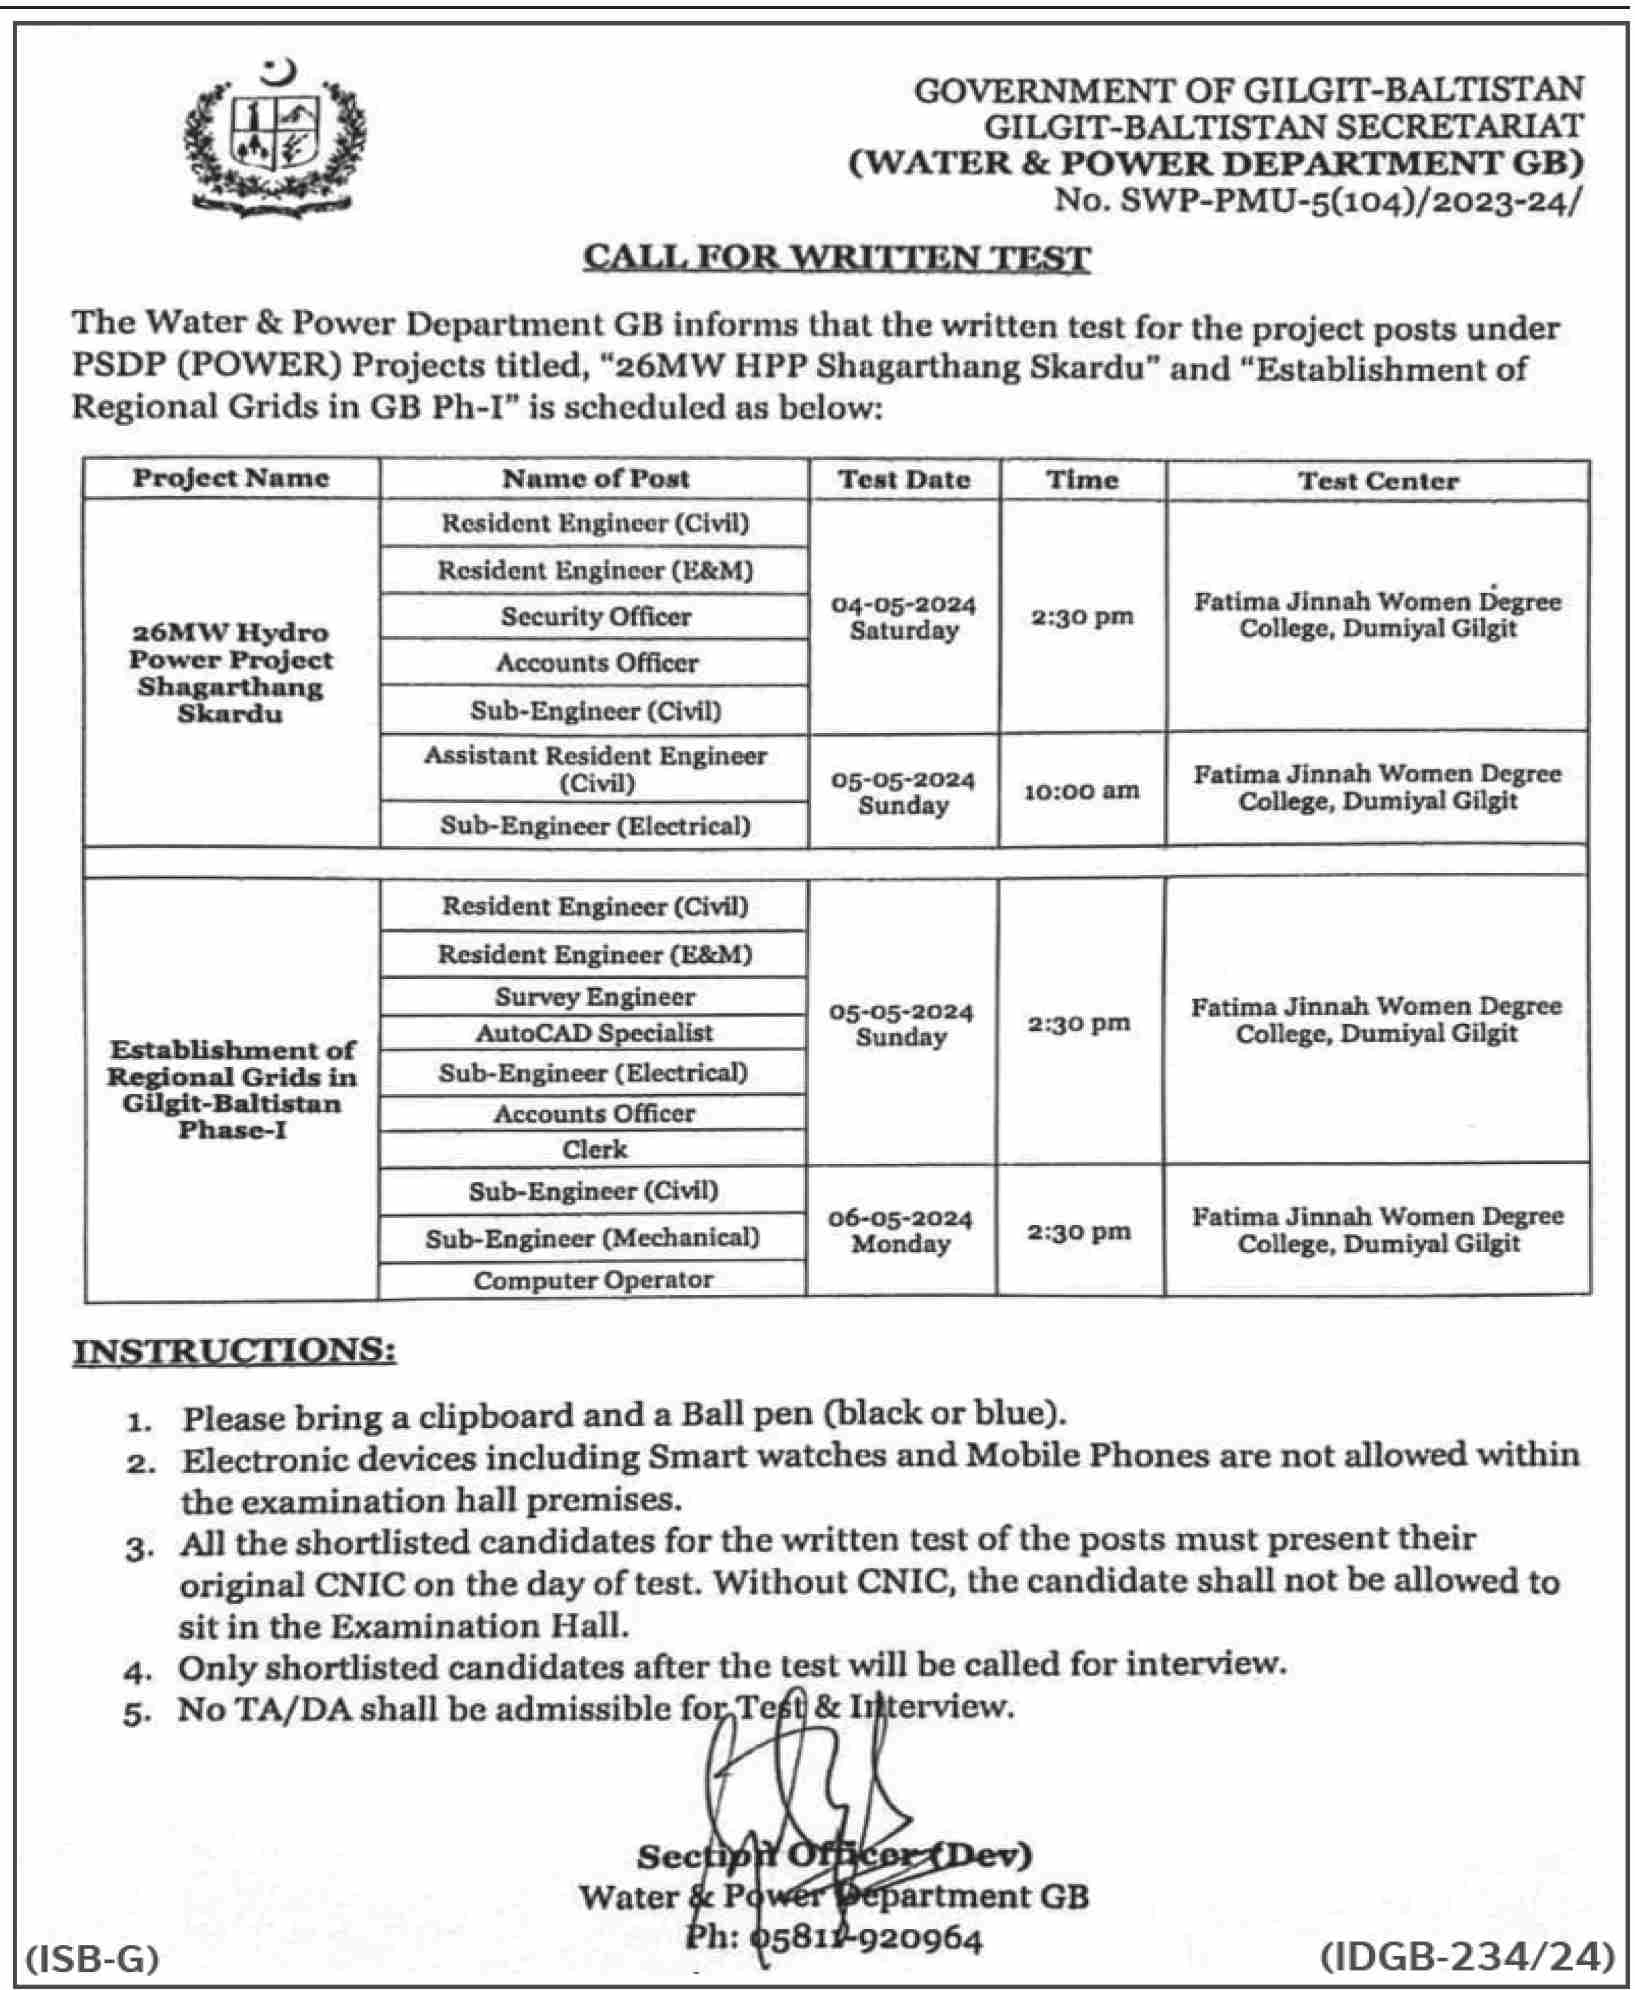 Wapda Gilgit Baltistan Jobs 2024